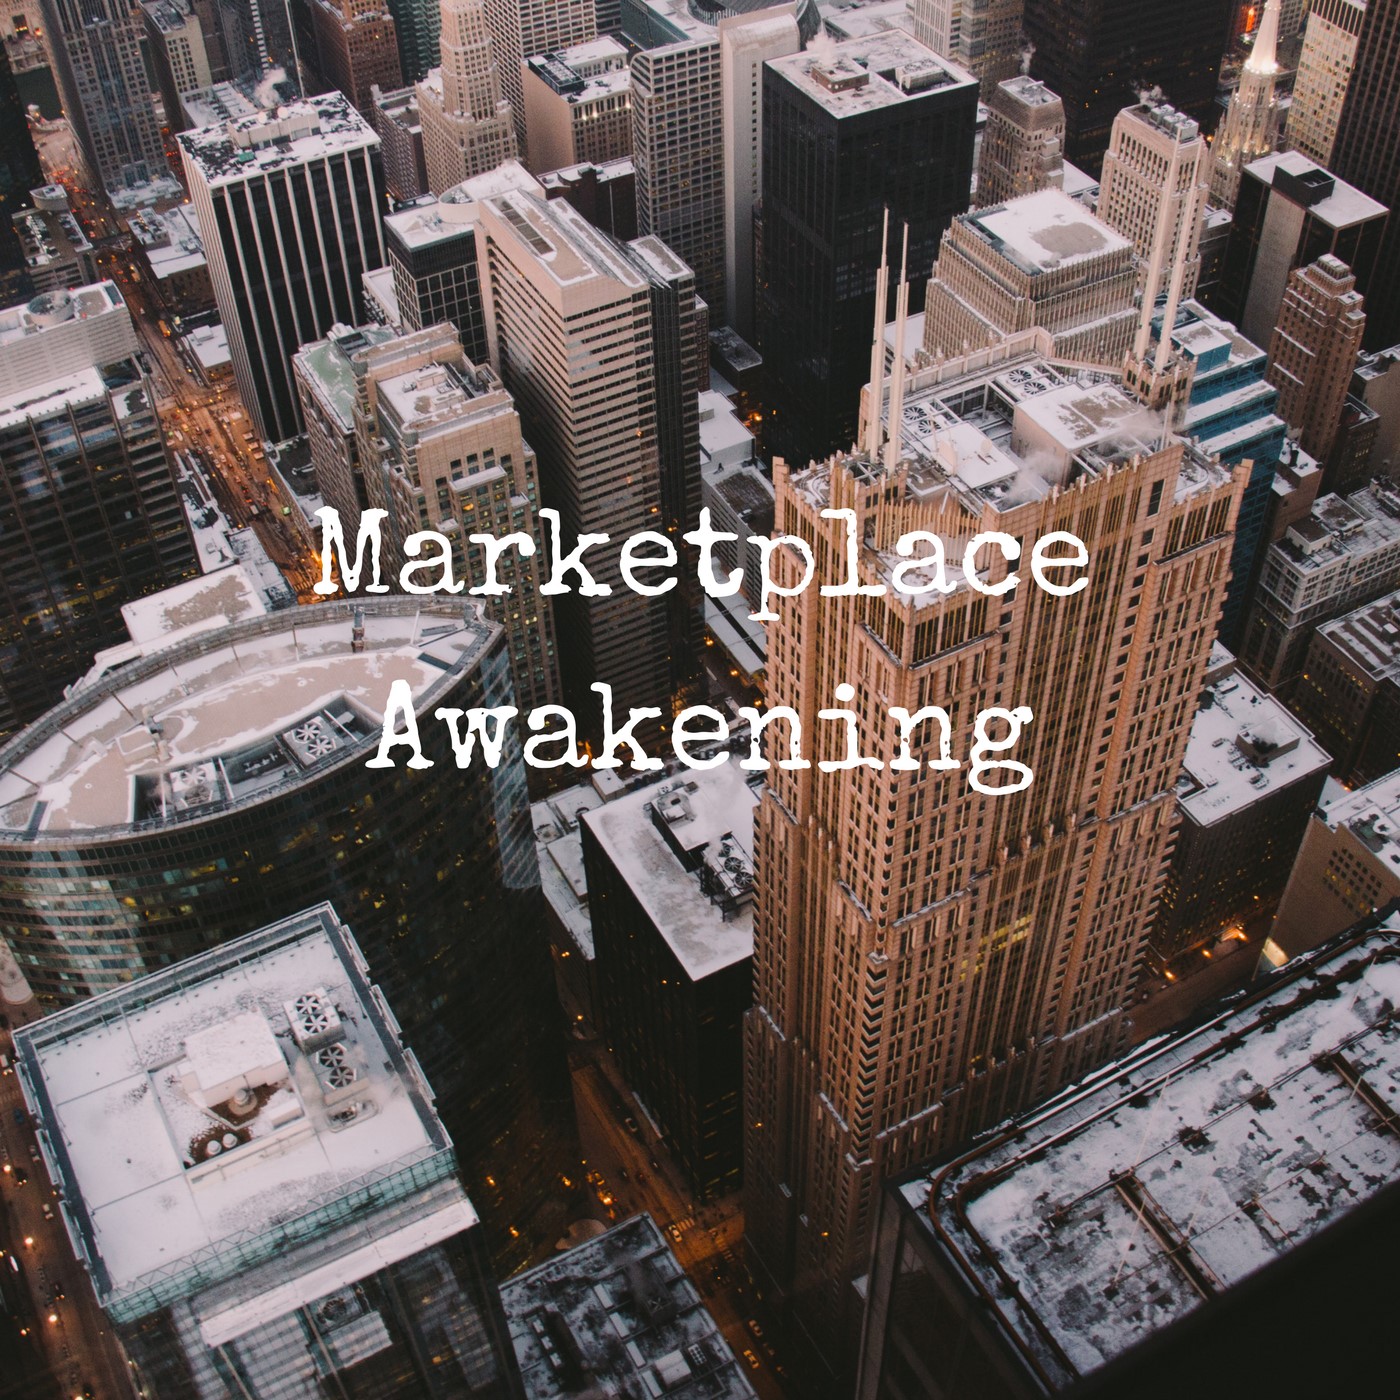 Marketplace Awakening